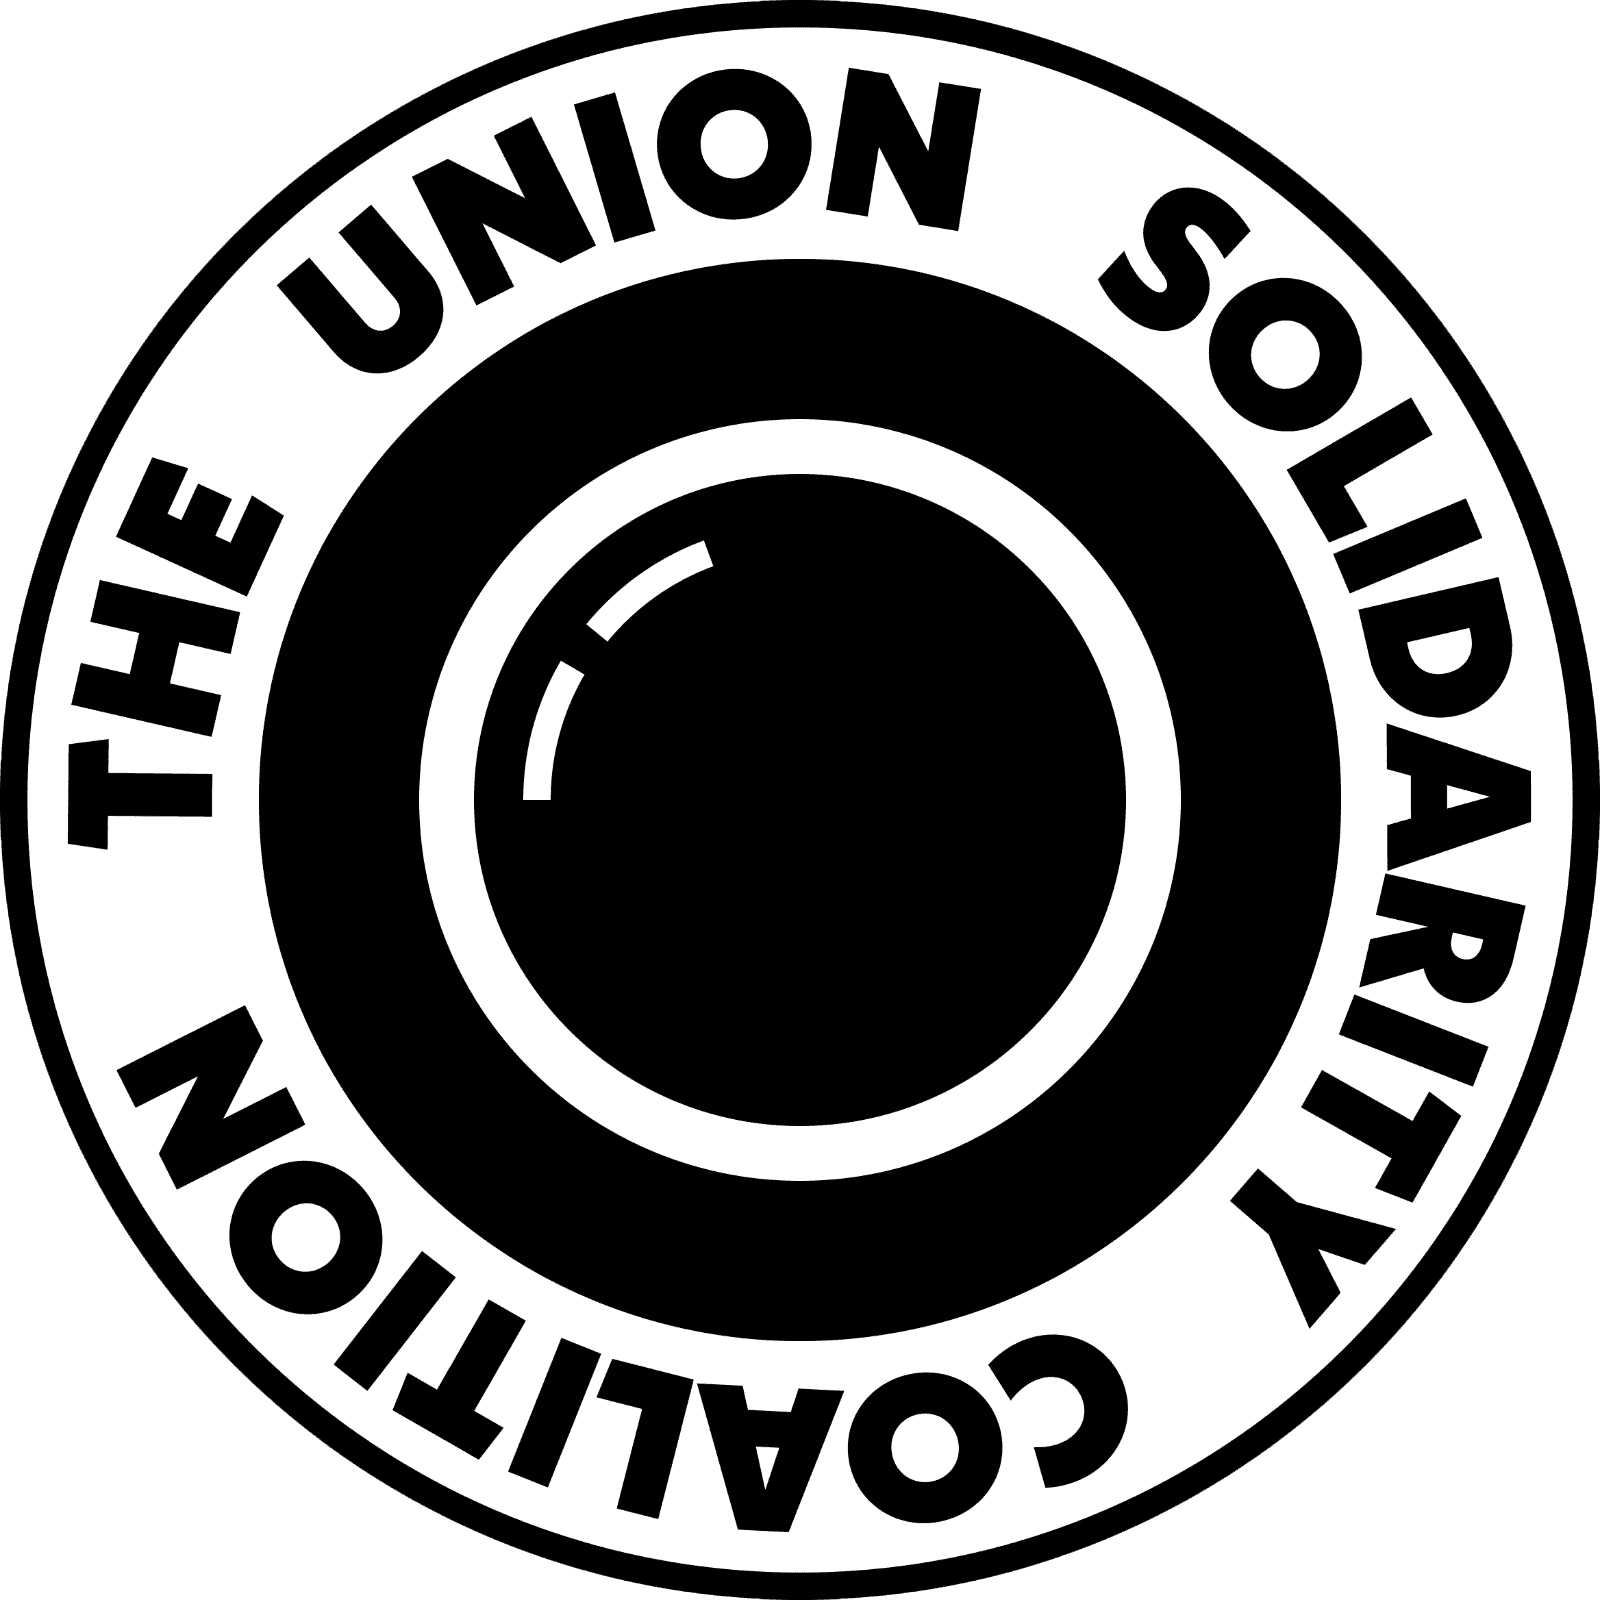 The Union Solidarity Coalition Logo